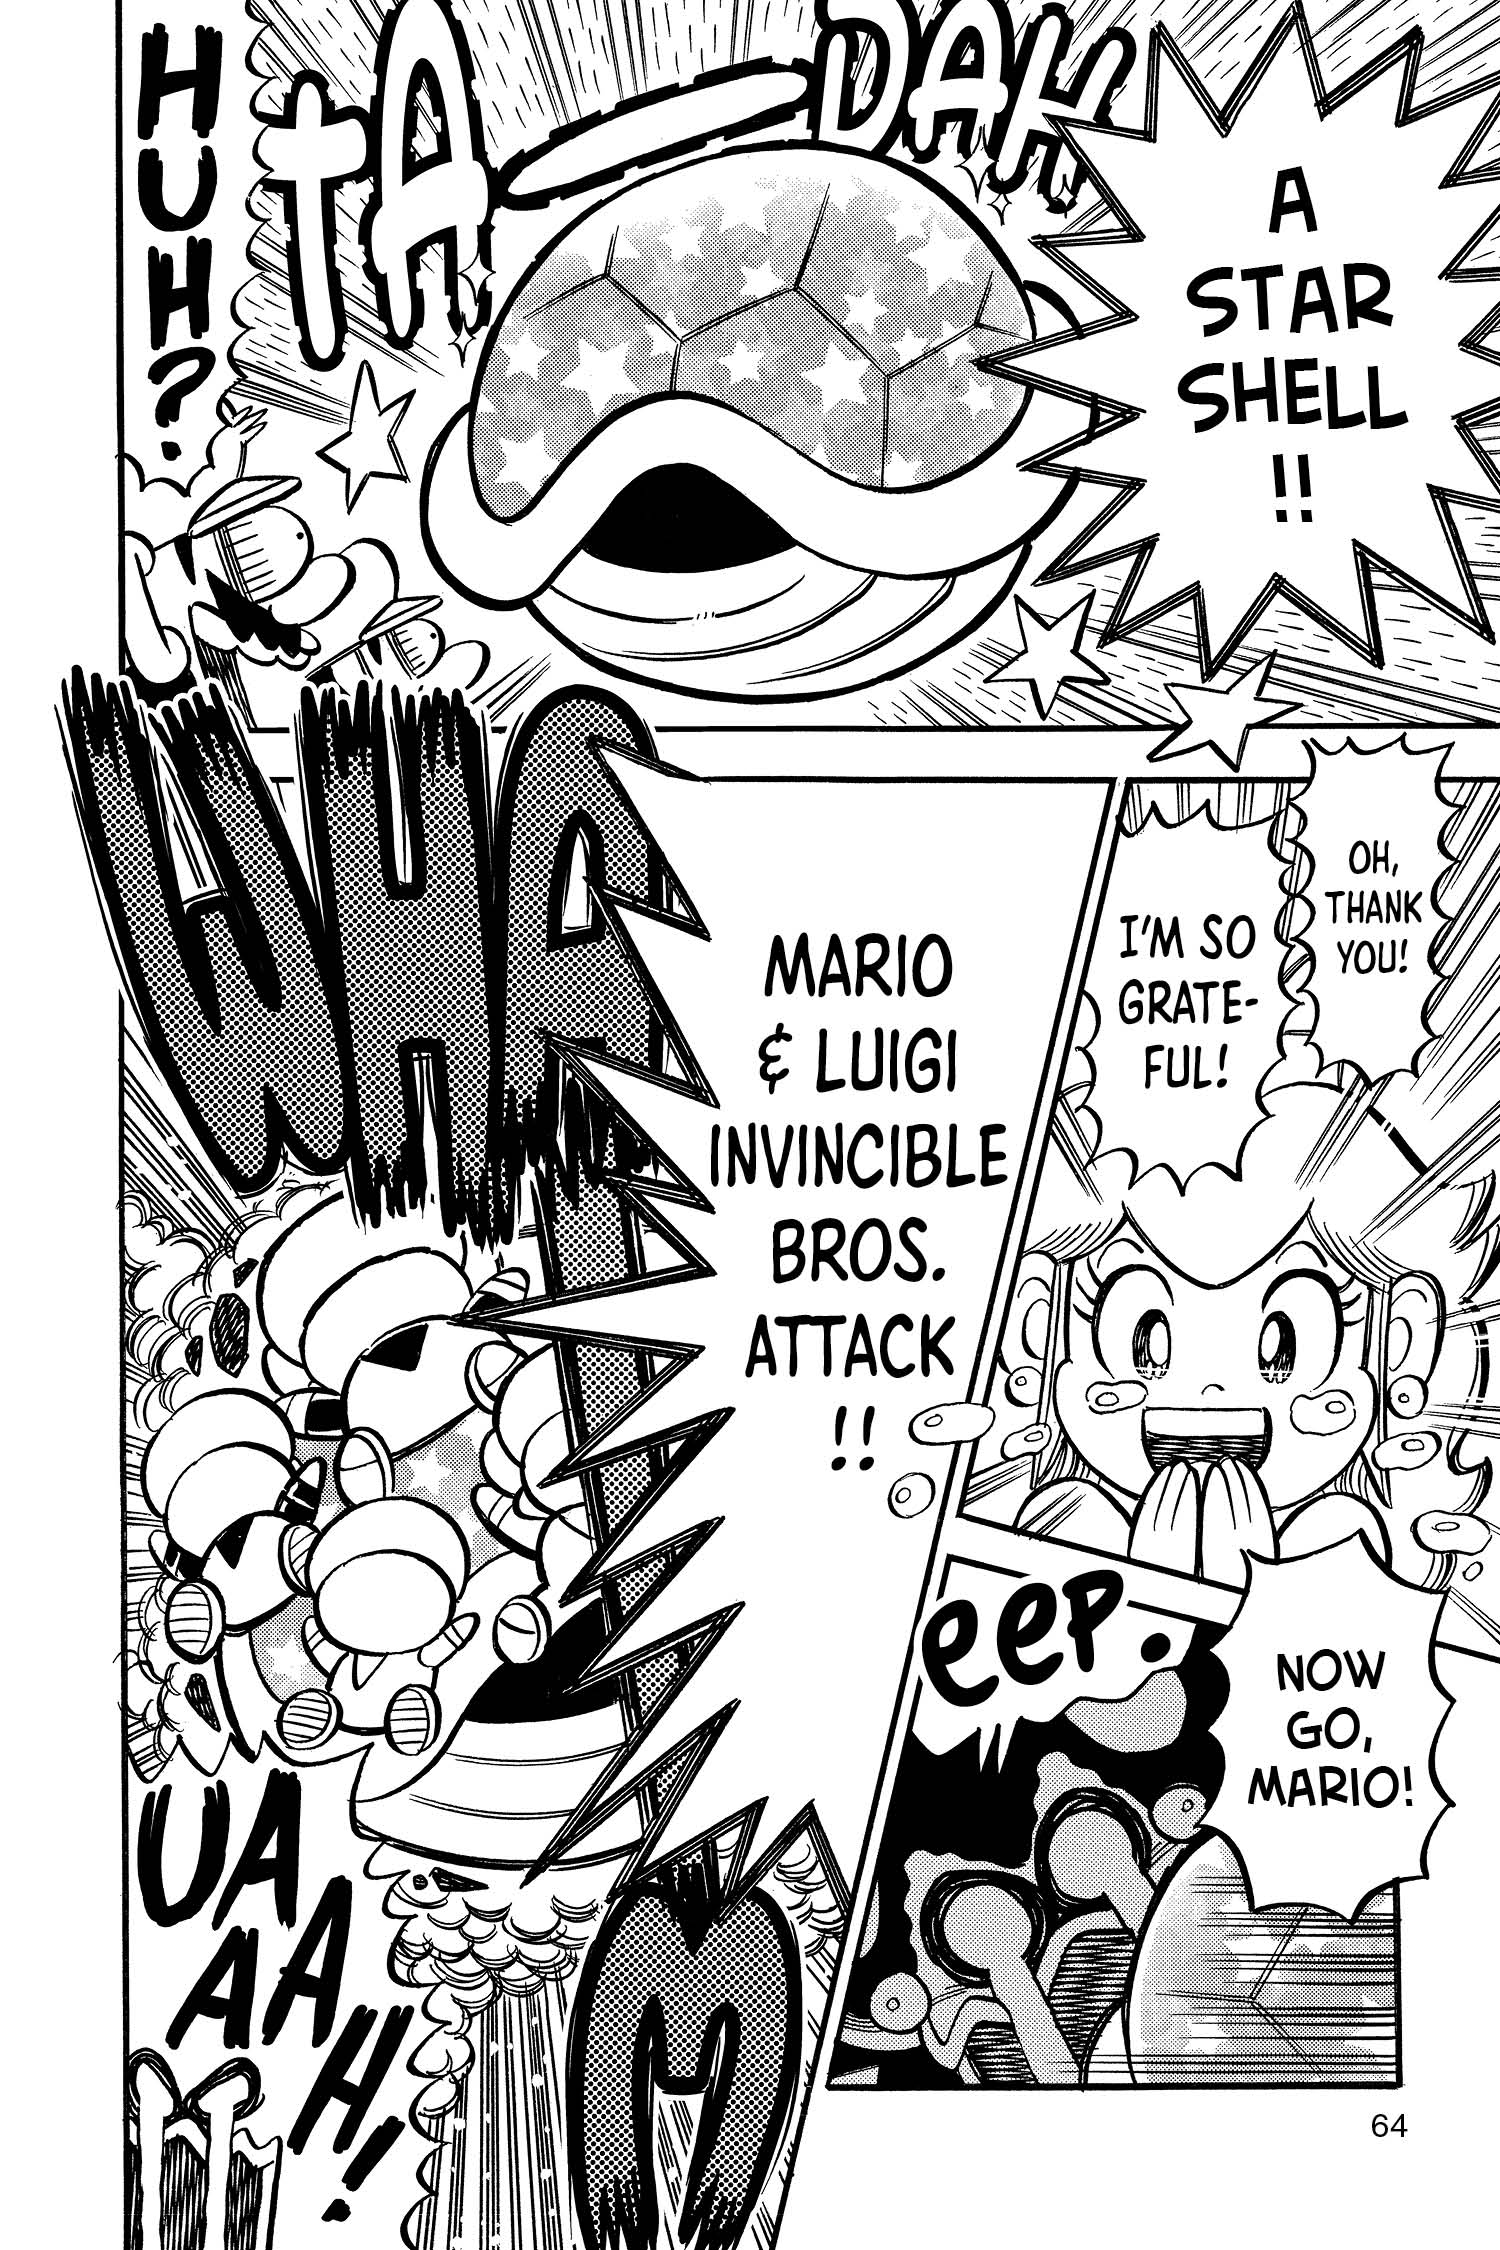 Mario and Luigi fighting together to save Peach. (Image: Viz Media)